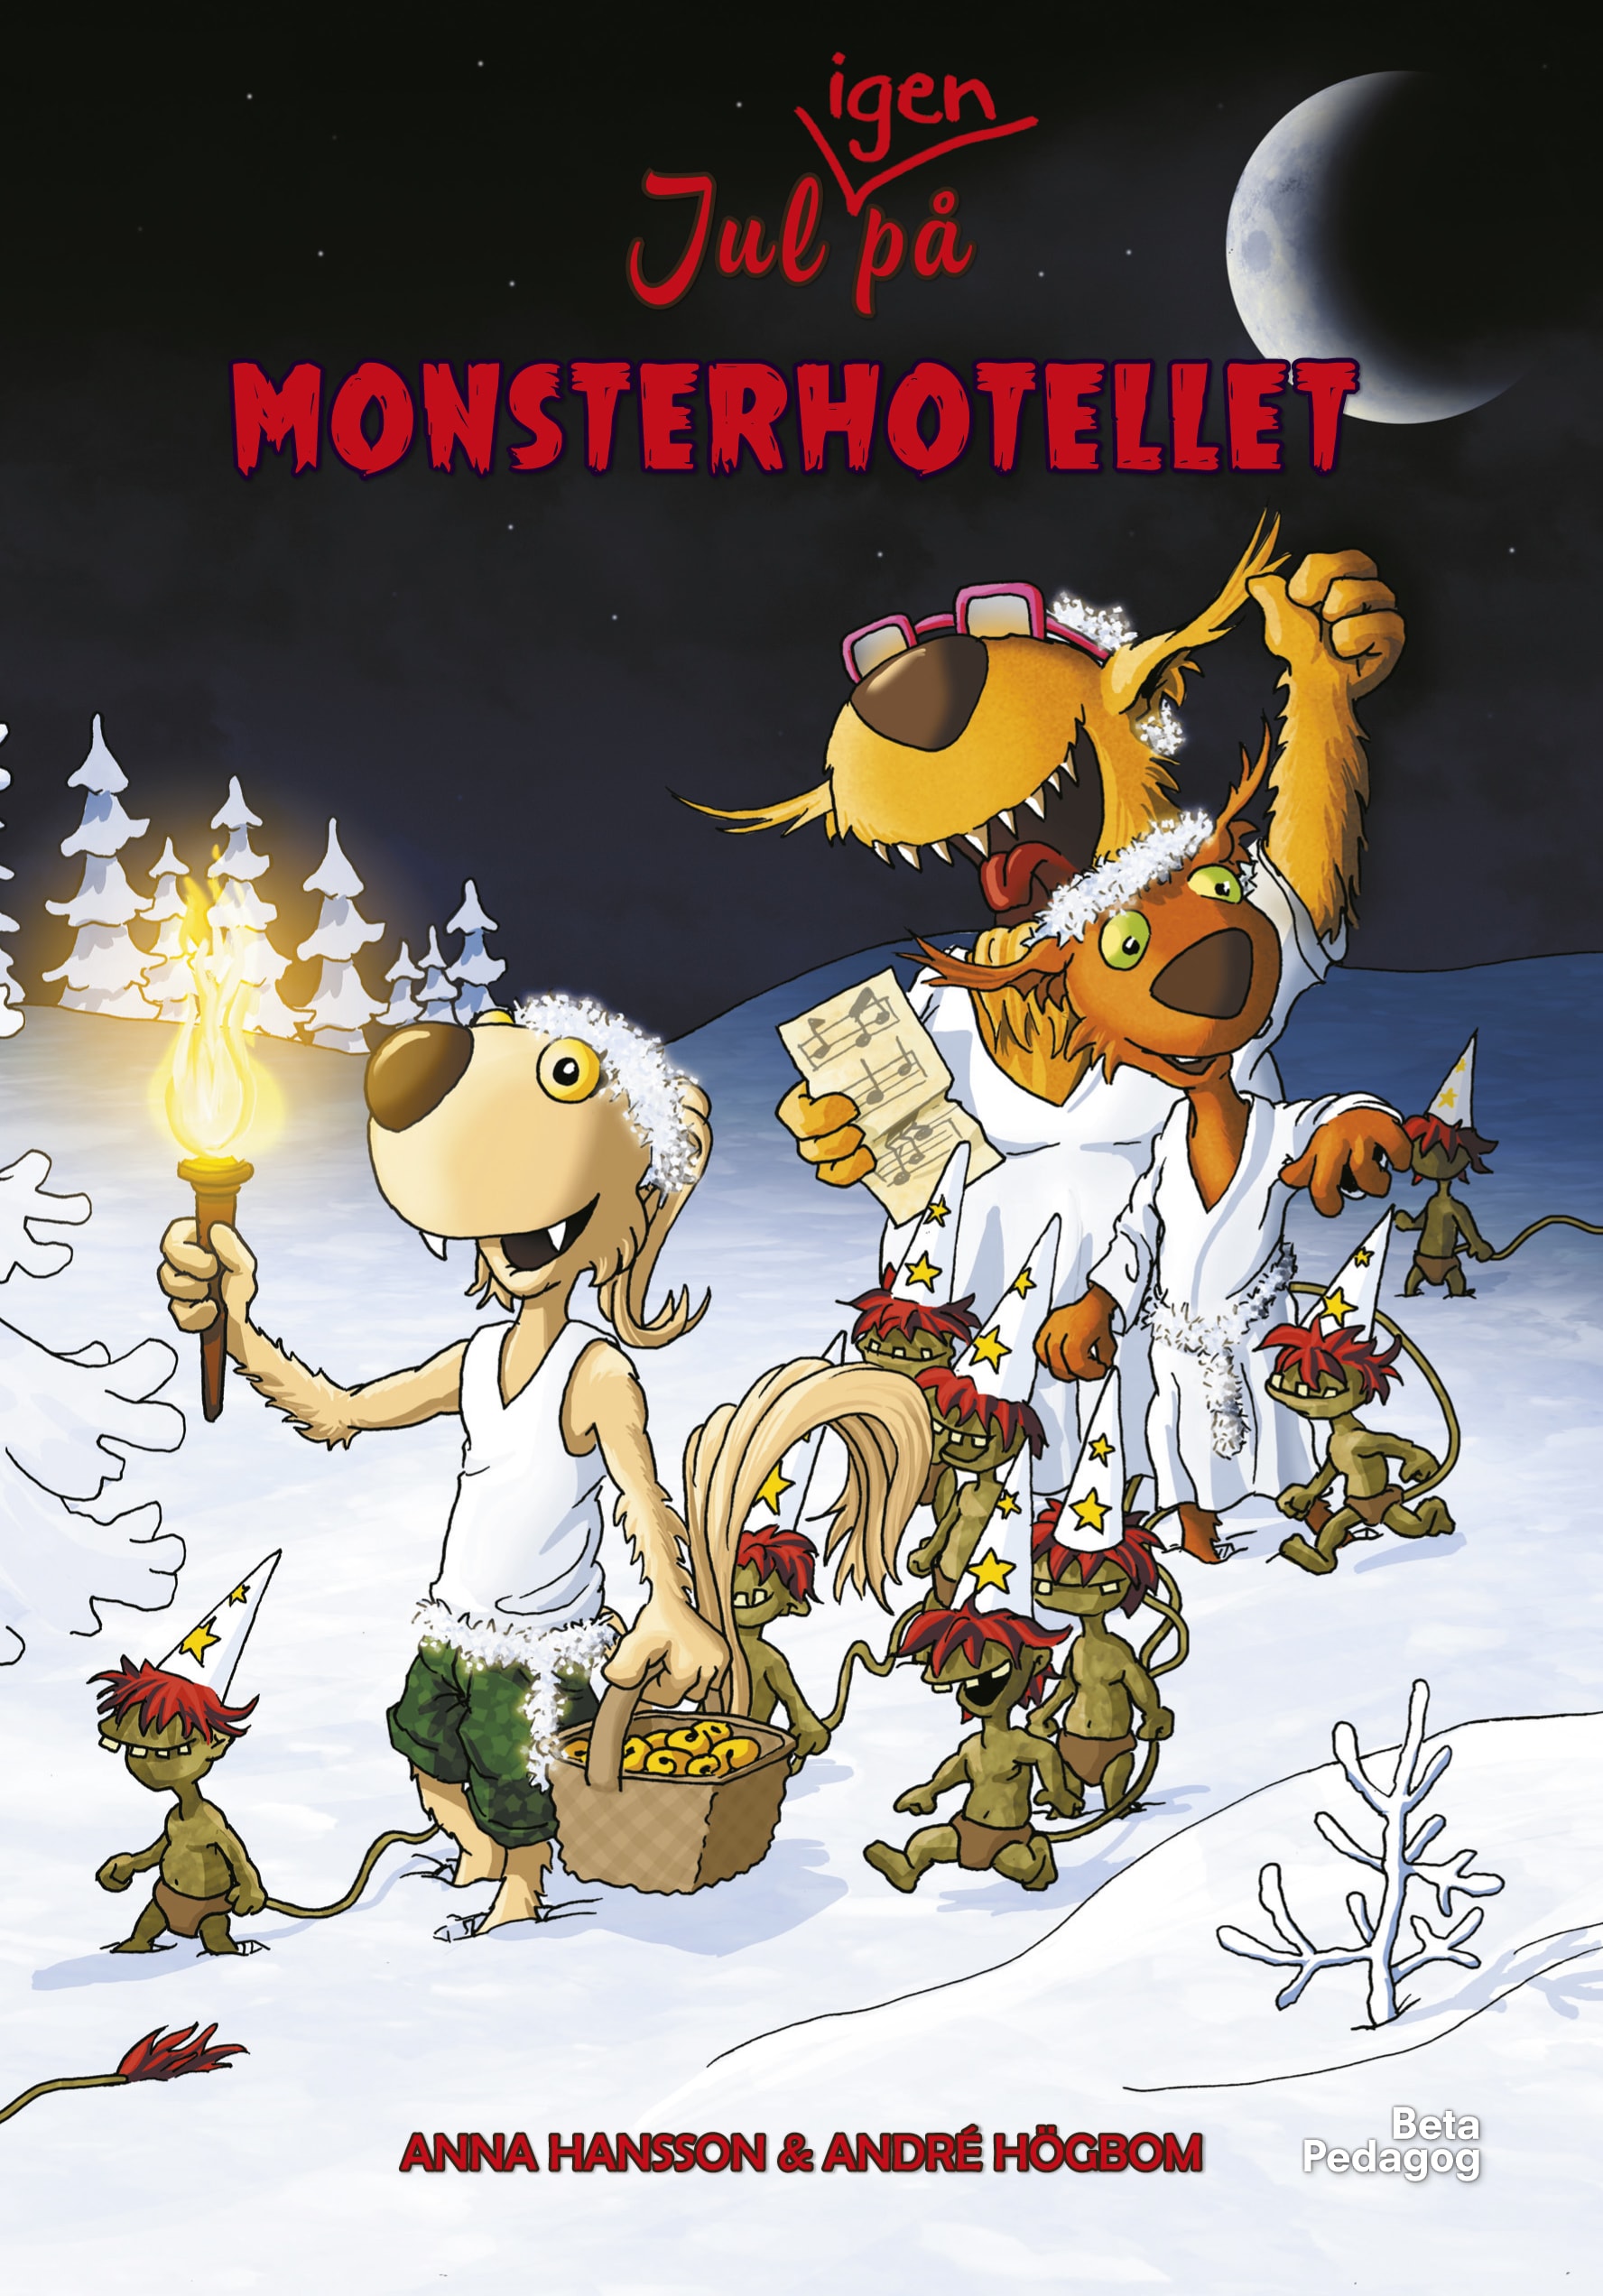 Monsterhotellet - Jul igen på Monsterhotellet